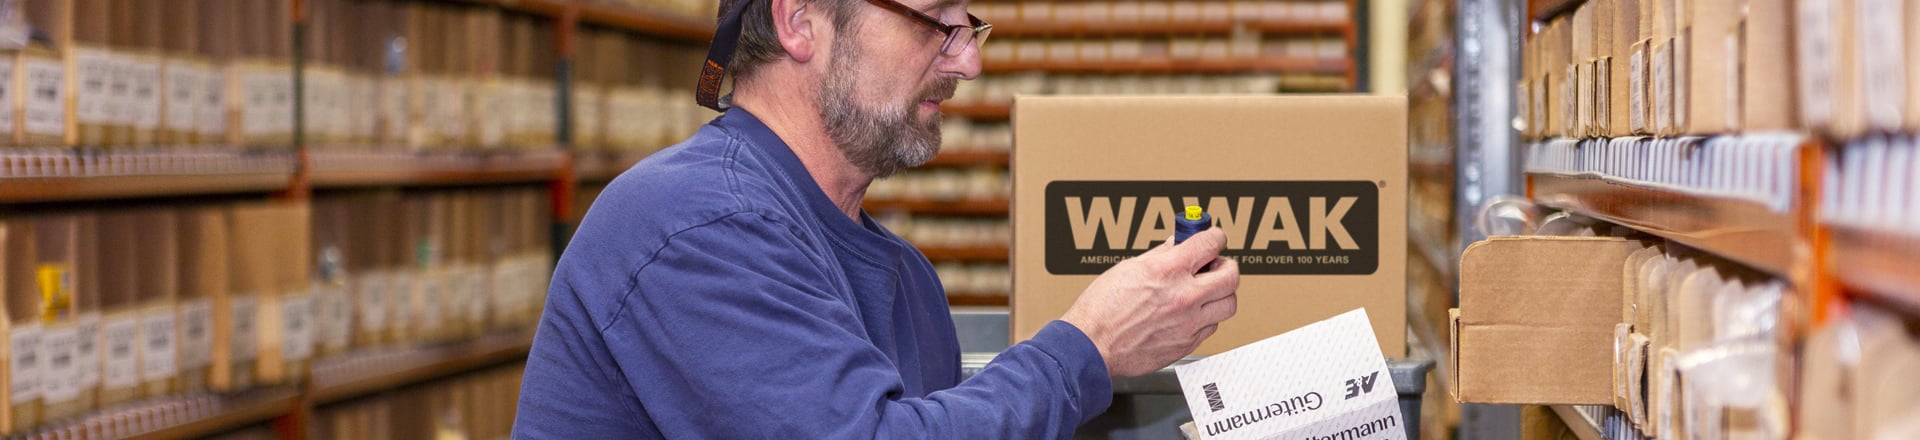 WAWAK Sewing Supplies Warehouse Picking Gutermann Thread Order